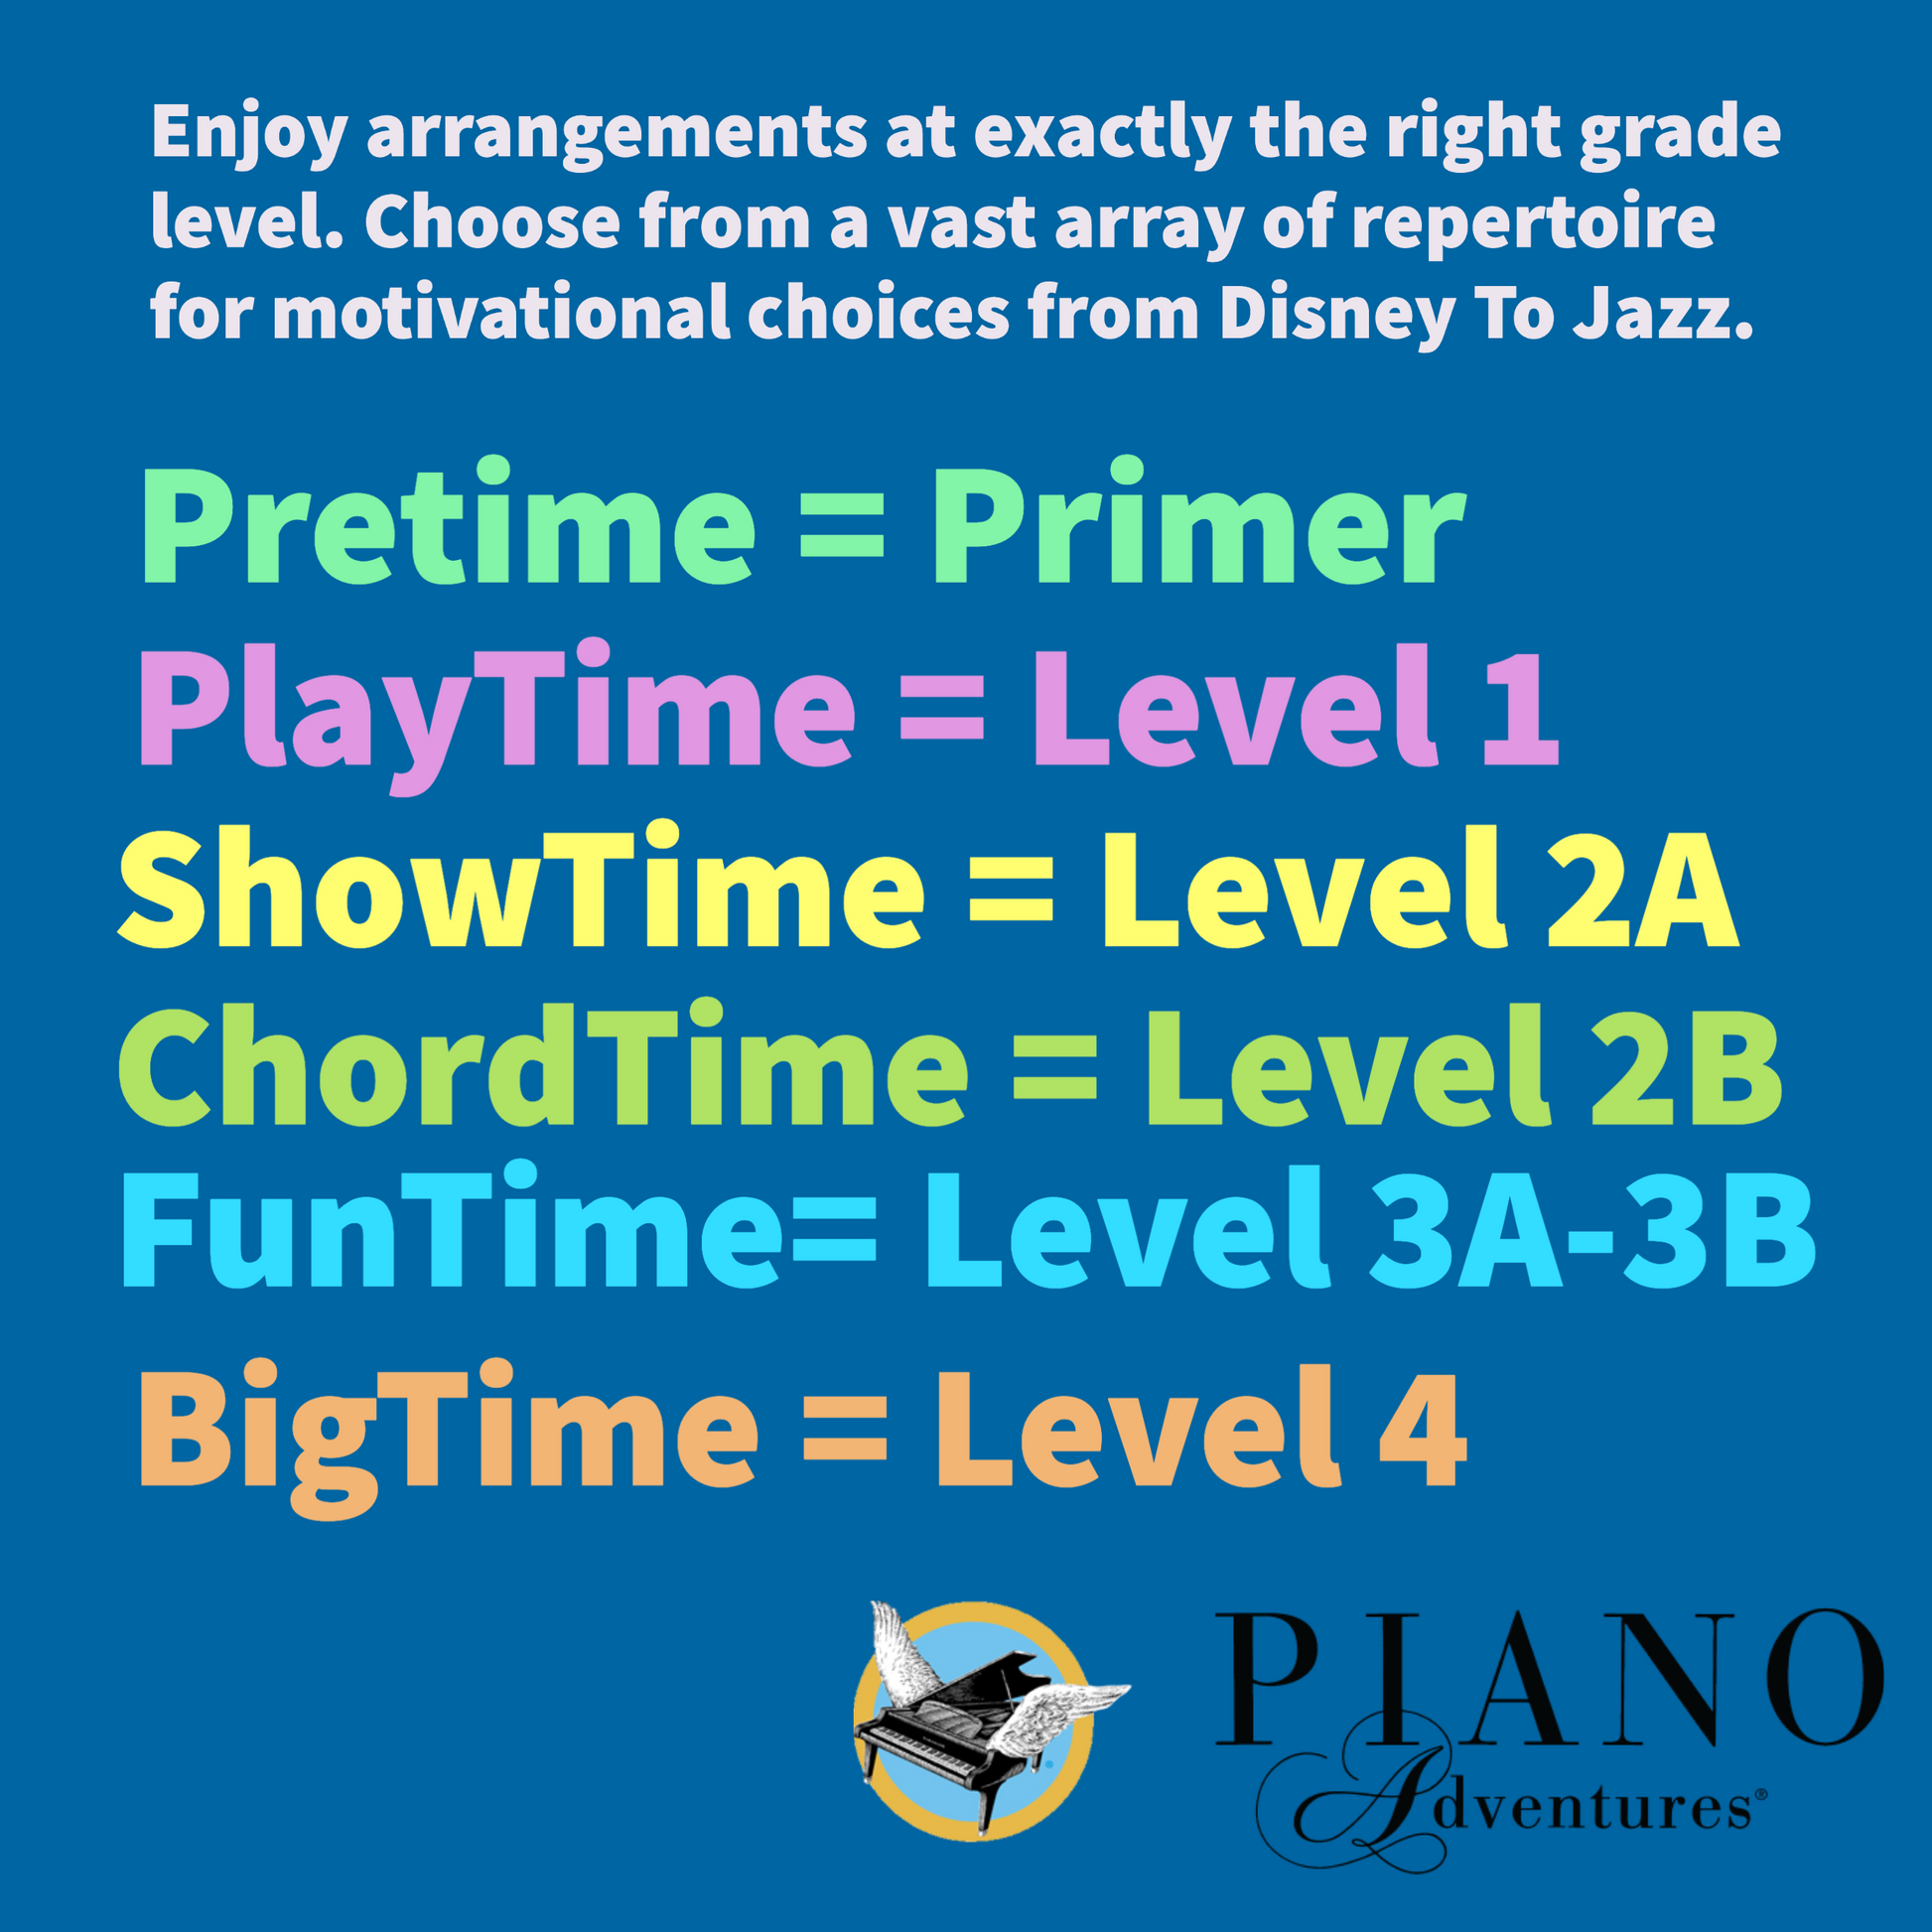 ShowTime Piano Jazz & Blues - Level 2A: Faber, Nancy, Faber